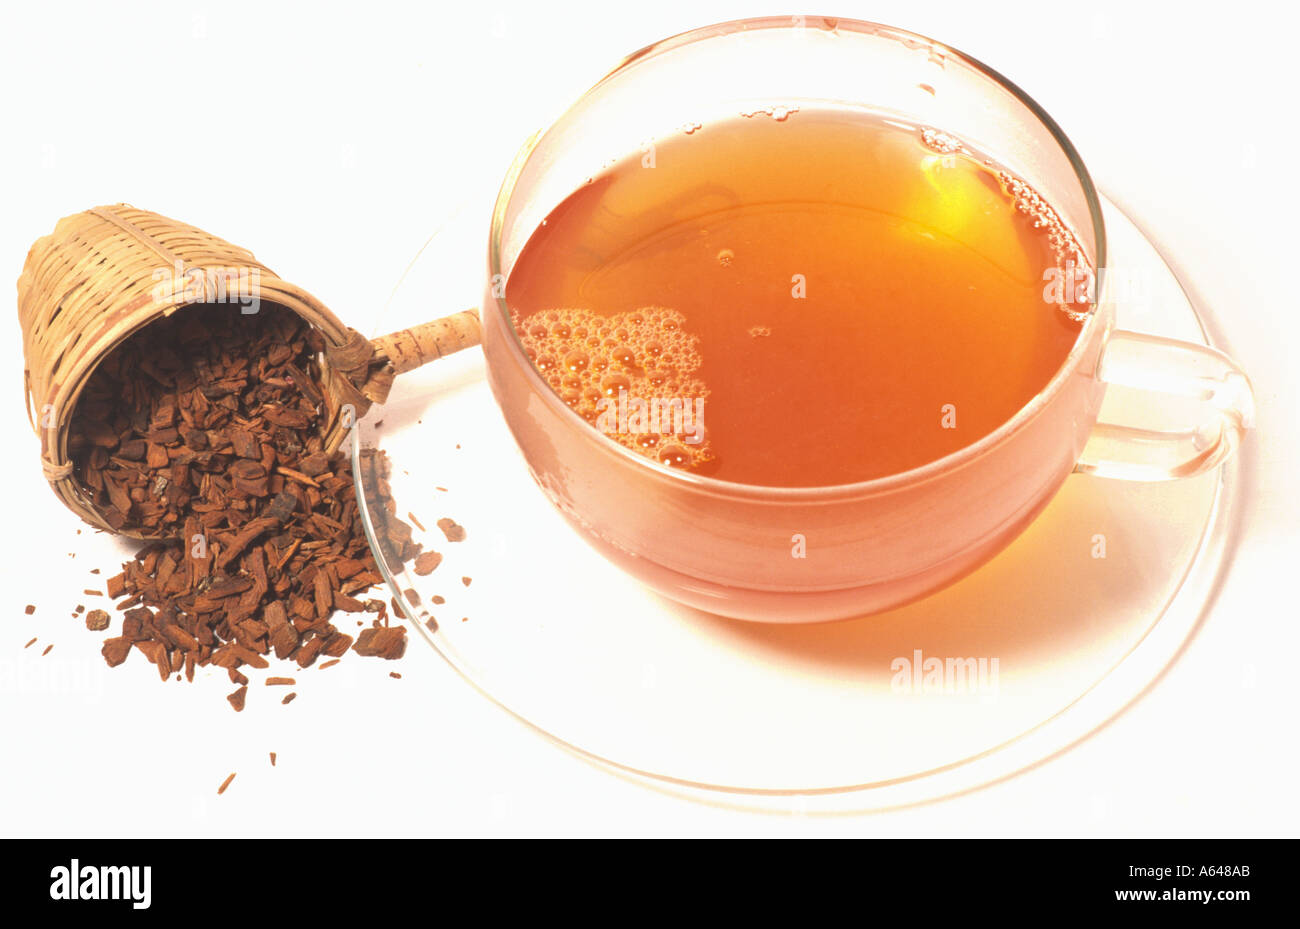 Chinarinde Cinchona calisaya ledgeriana Chinabork tea Stock Photo